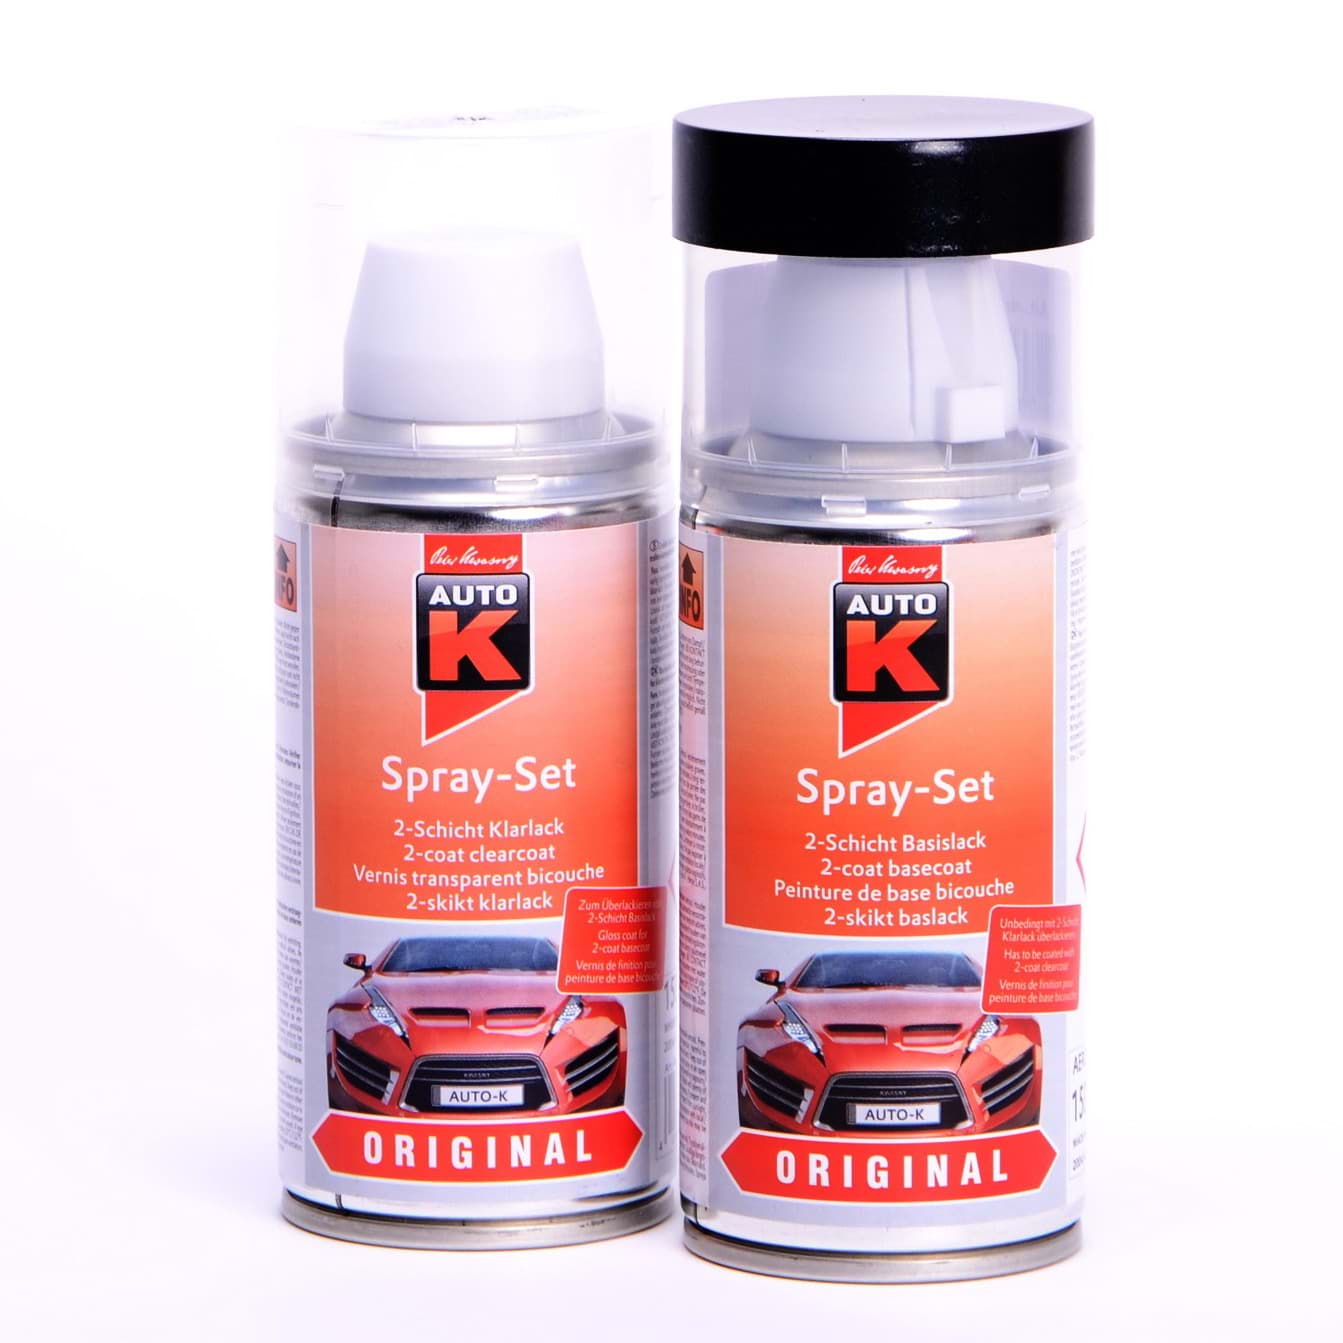 Afbeelding van Auto-K Spray-Set Autolack für Opel 259 Halitblau 21325